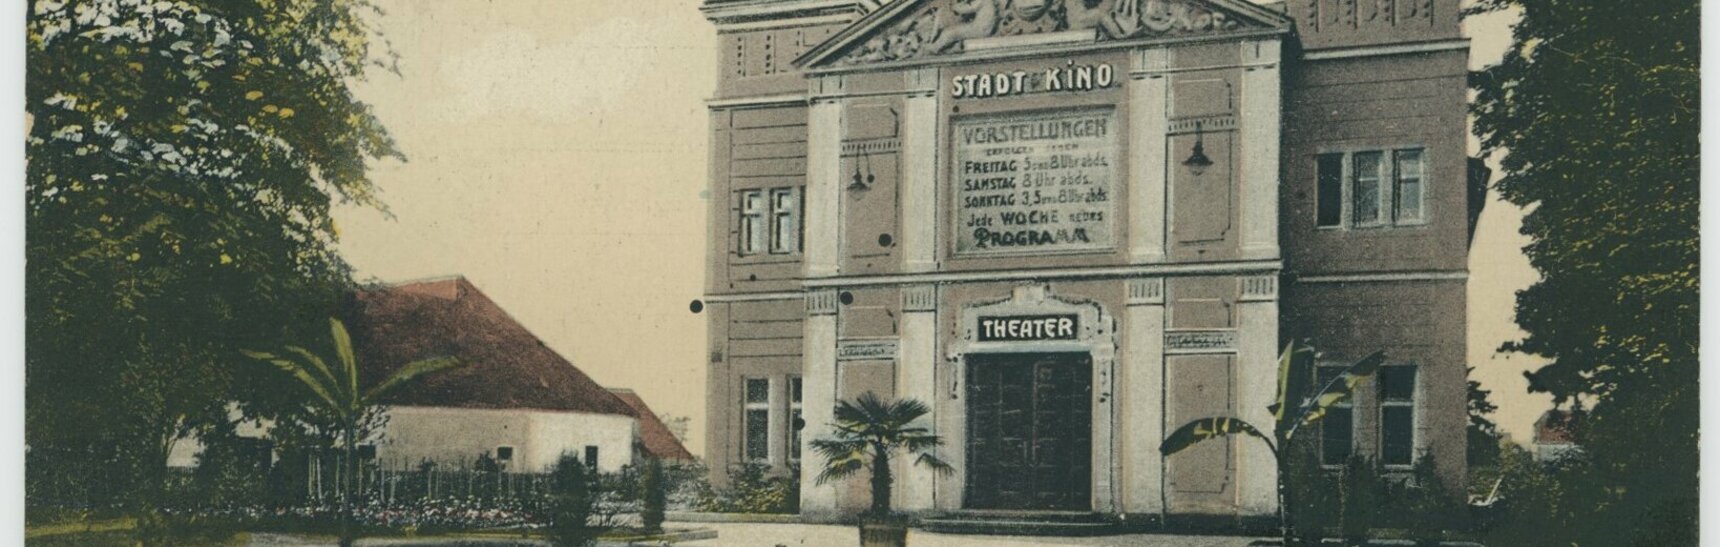 Stadt-Kino-Theater in Leibnitz